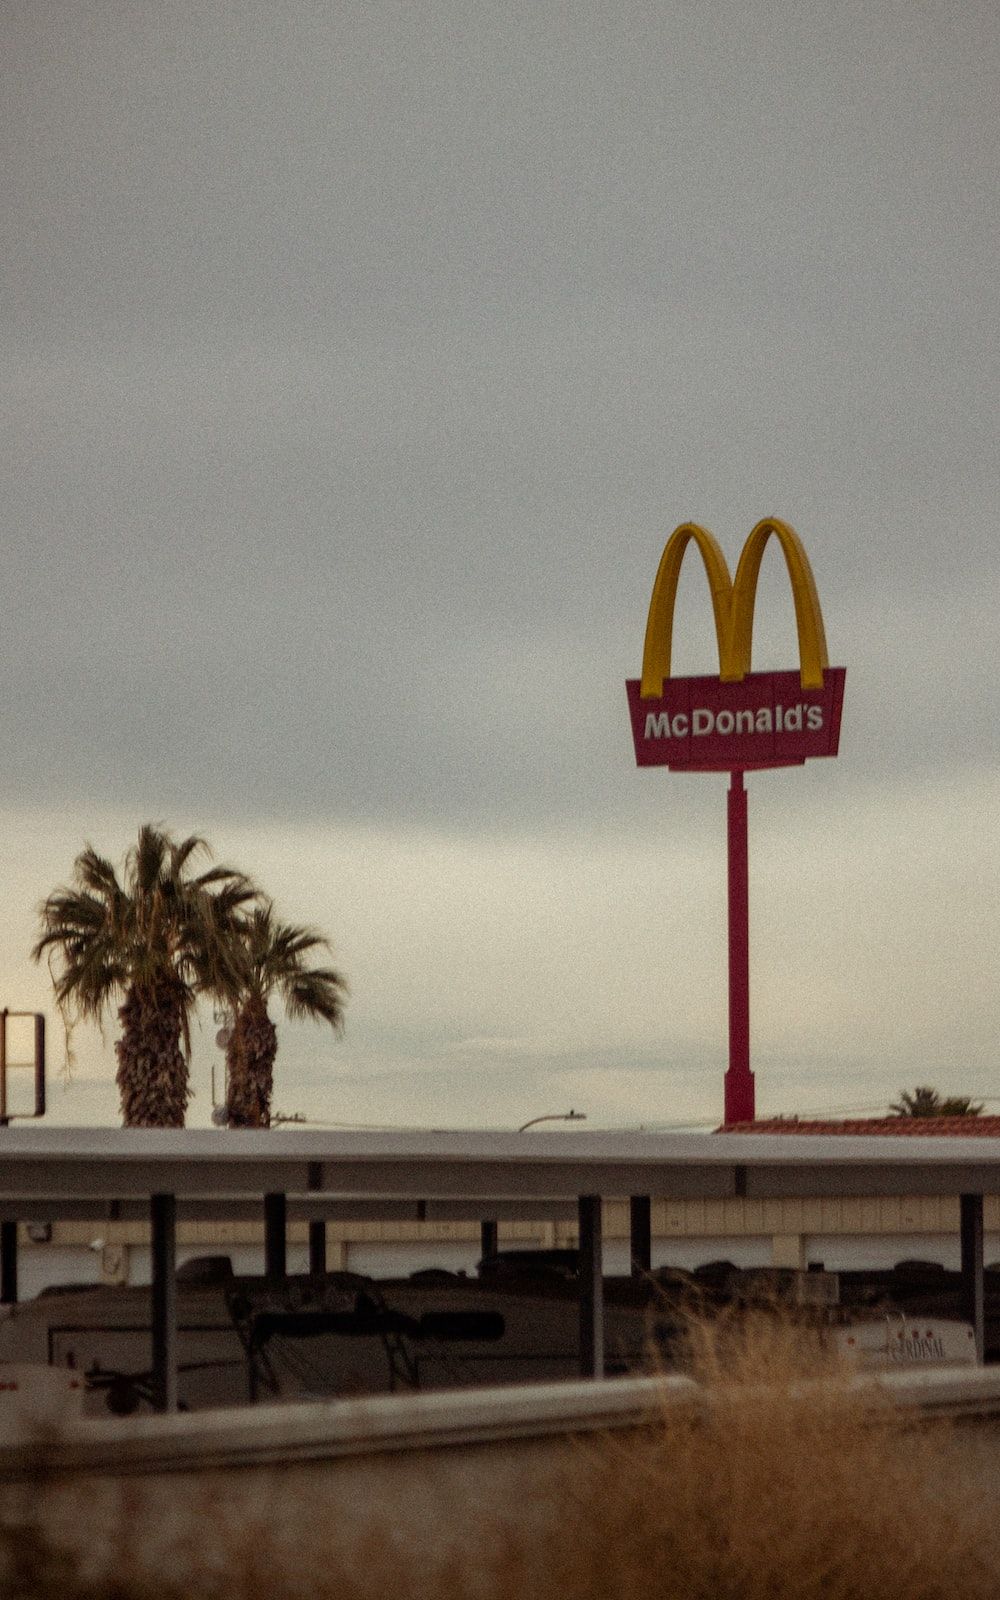  McDonald's Hintergrundbild 1000x1600. red and yellow UNK sign photo